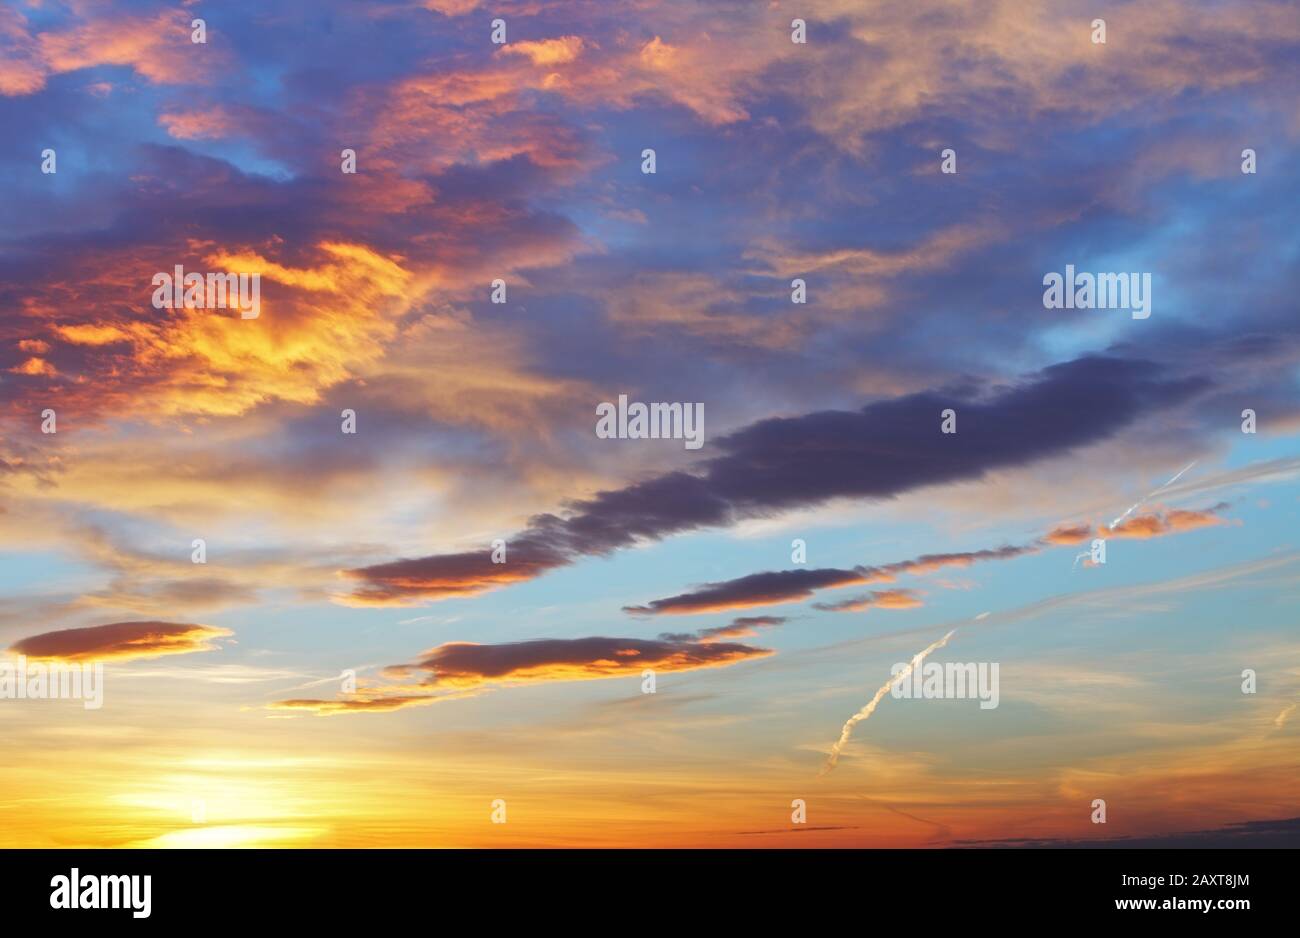 Only sky sunset / sunrise Stock Photo